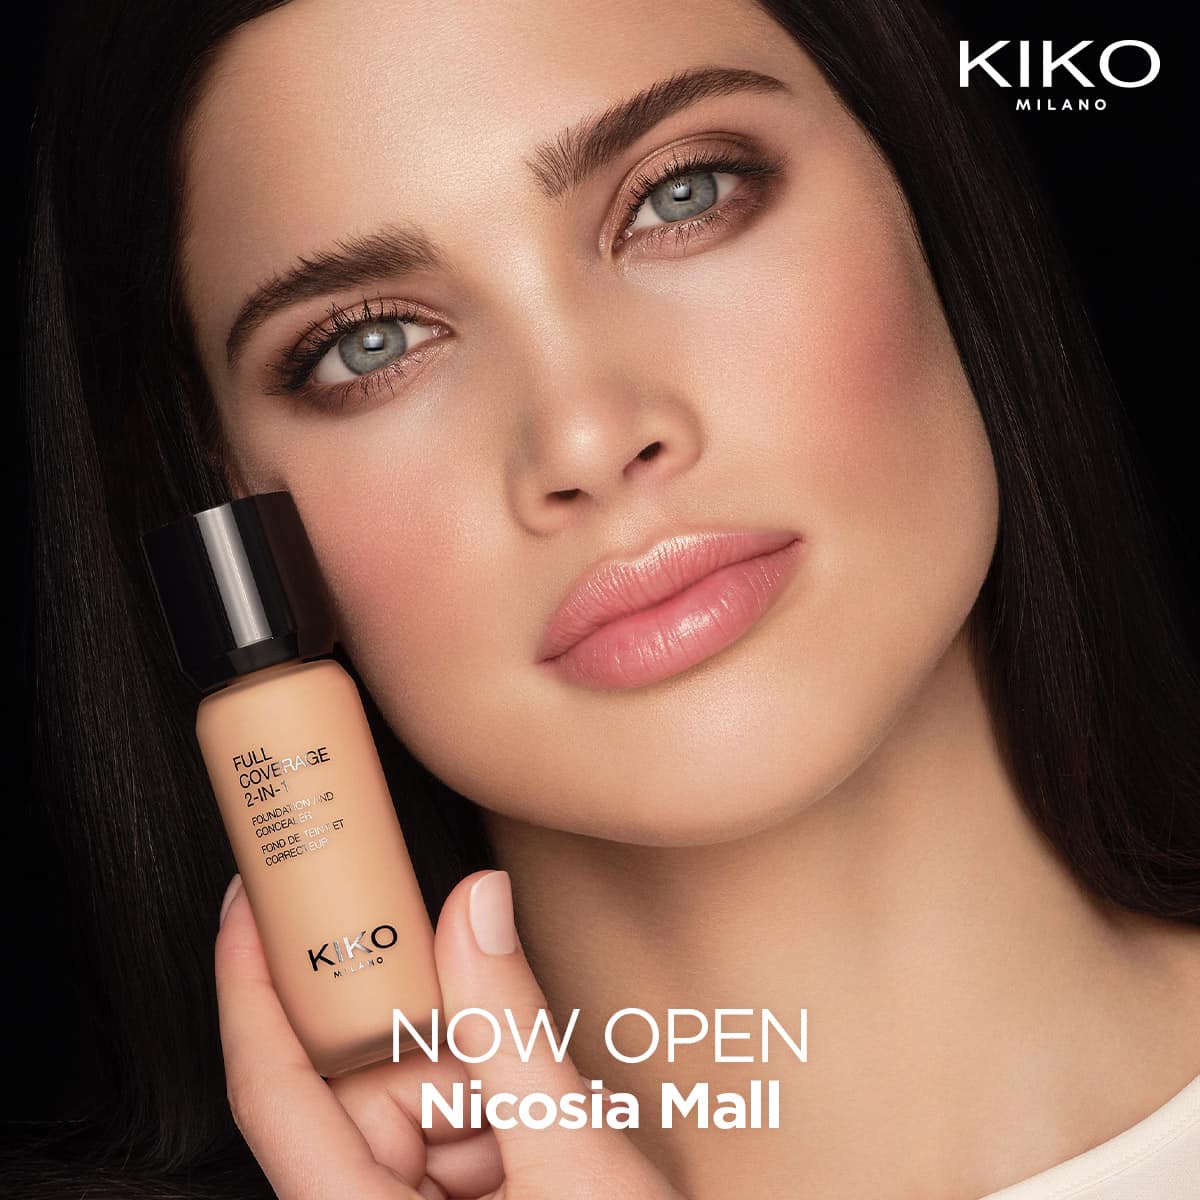 Kiko Milano Τo no1 Make Up brand της Ιταλίας στο Nicosia Mall